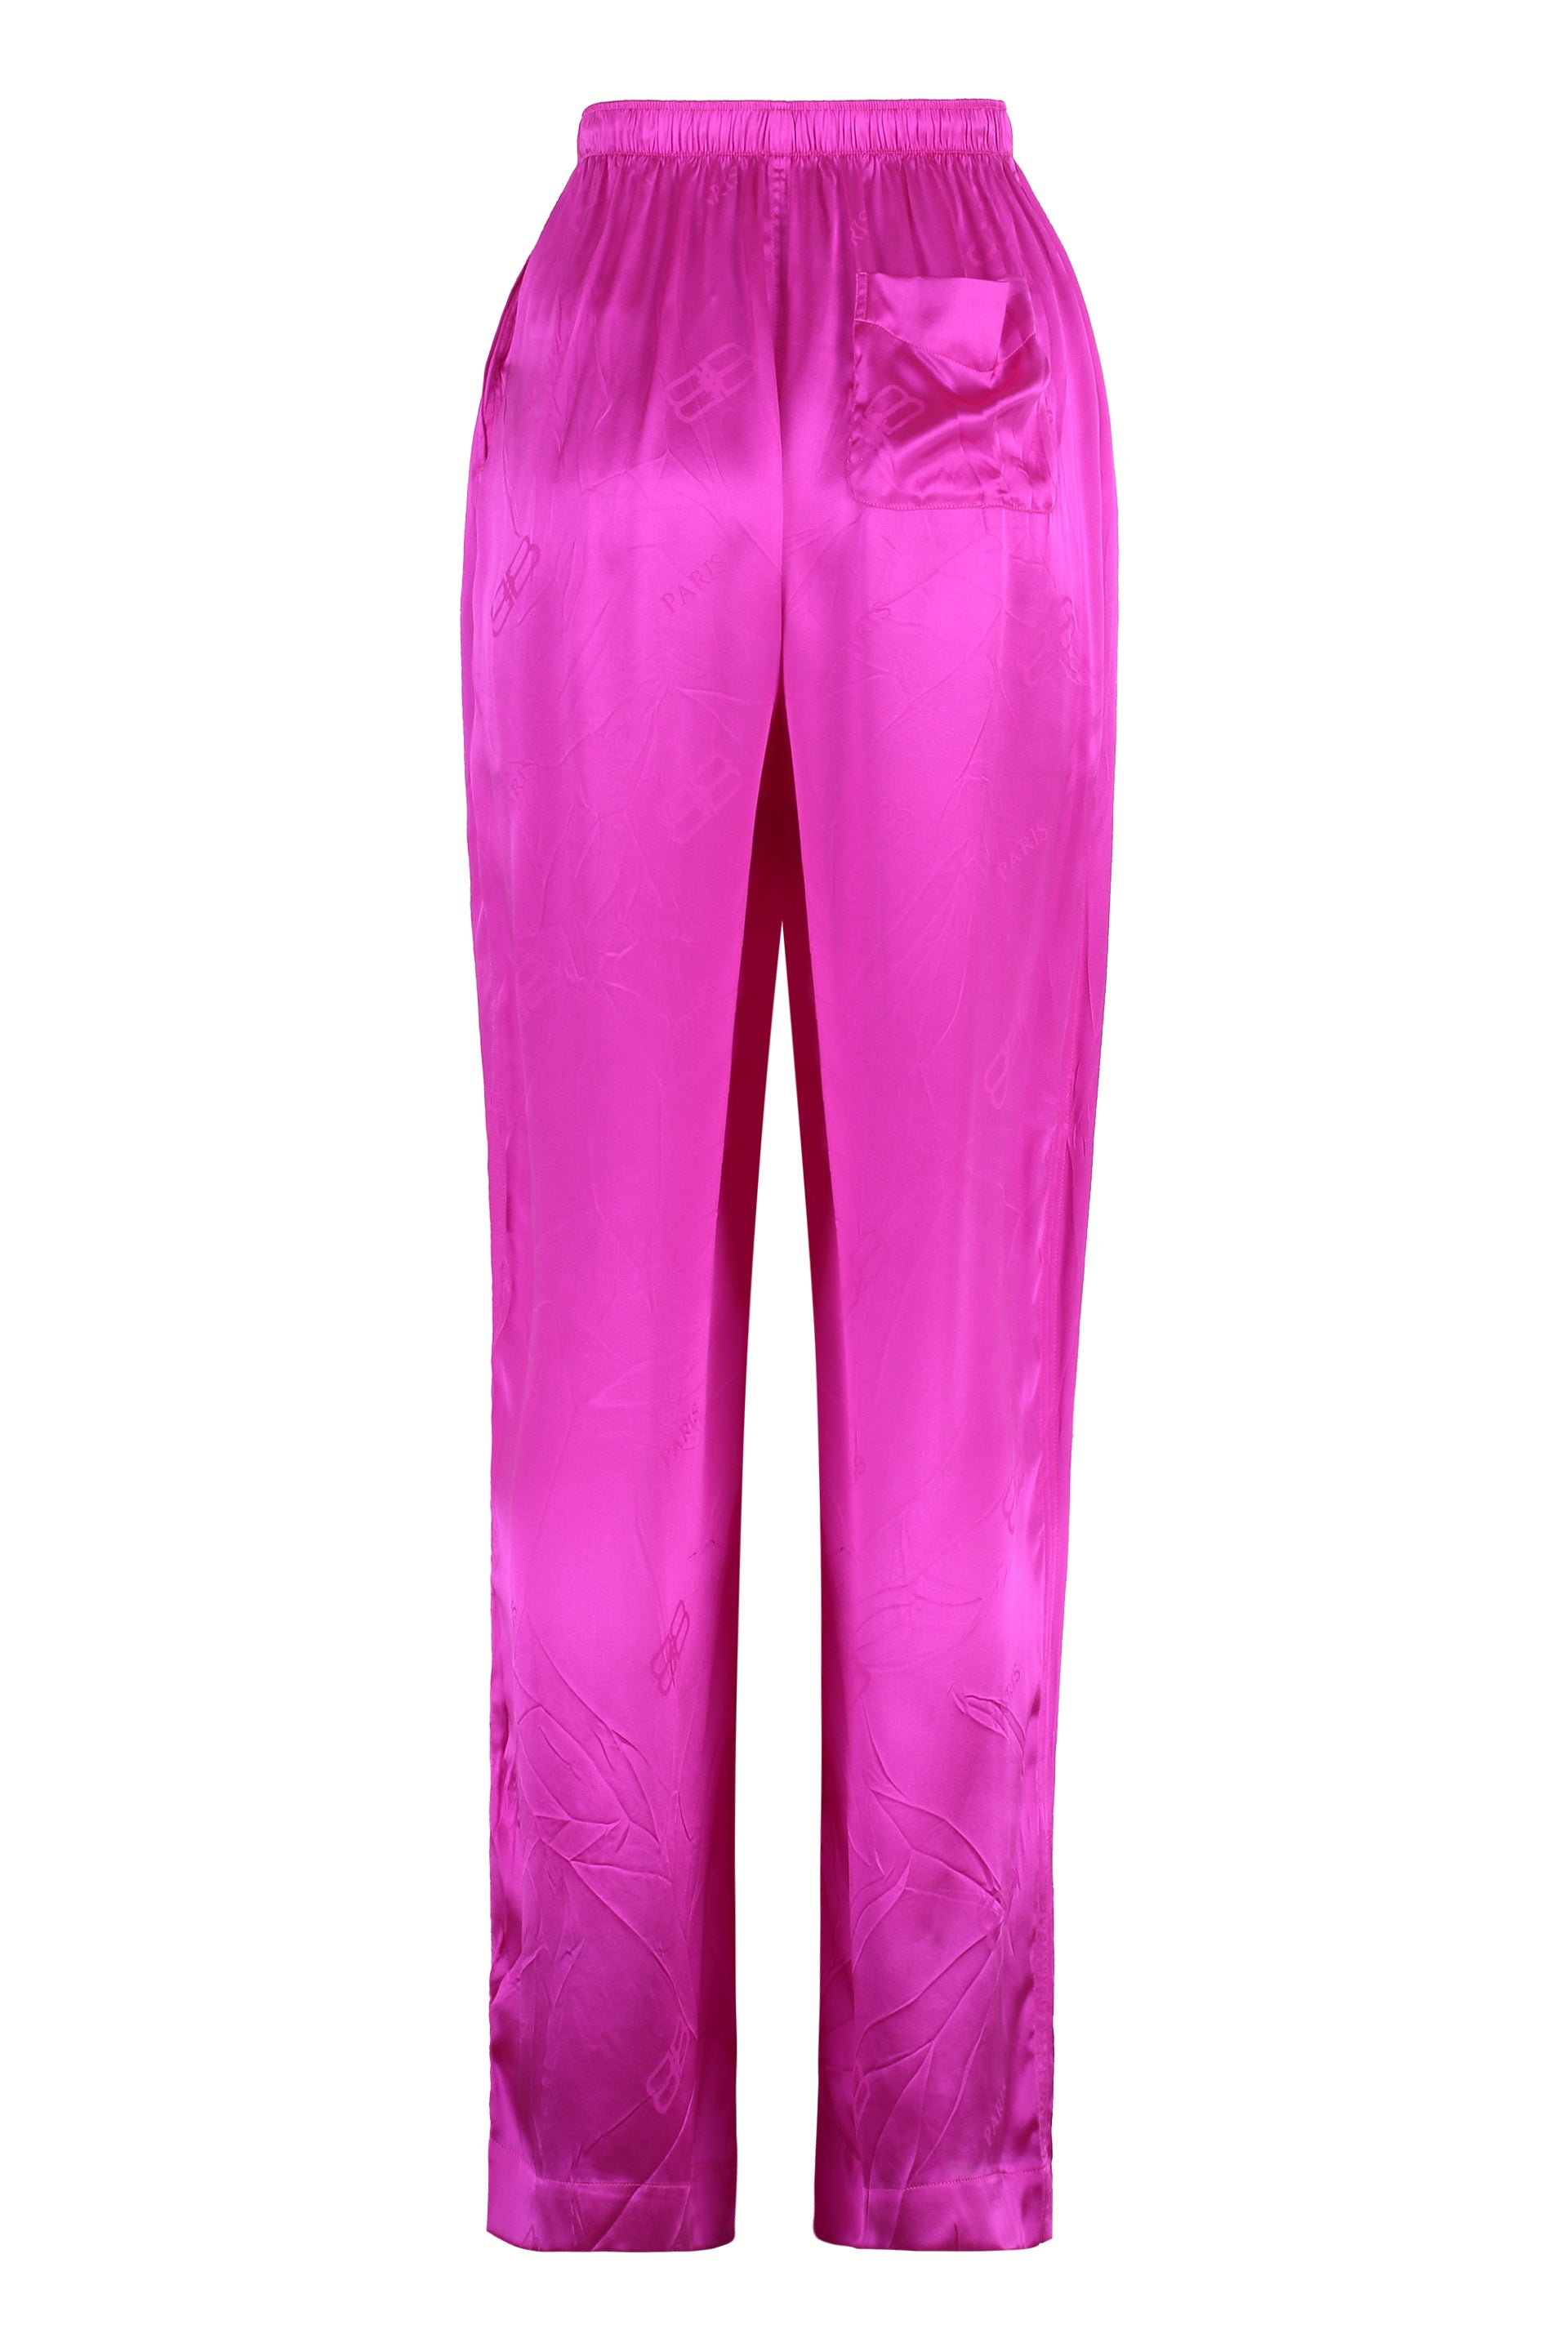 Shop Balenciaga Silk Pajama Pants In Fuchsia For Women